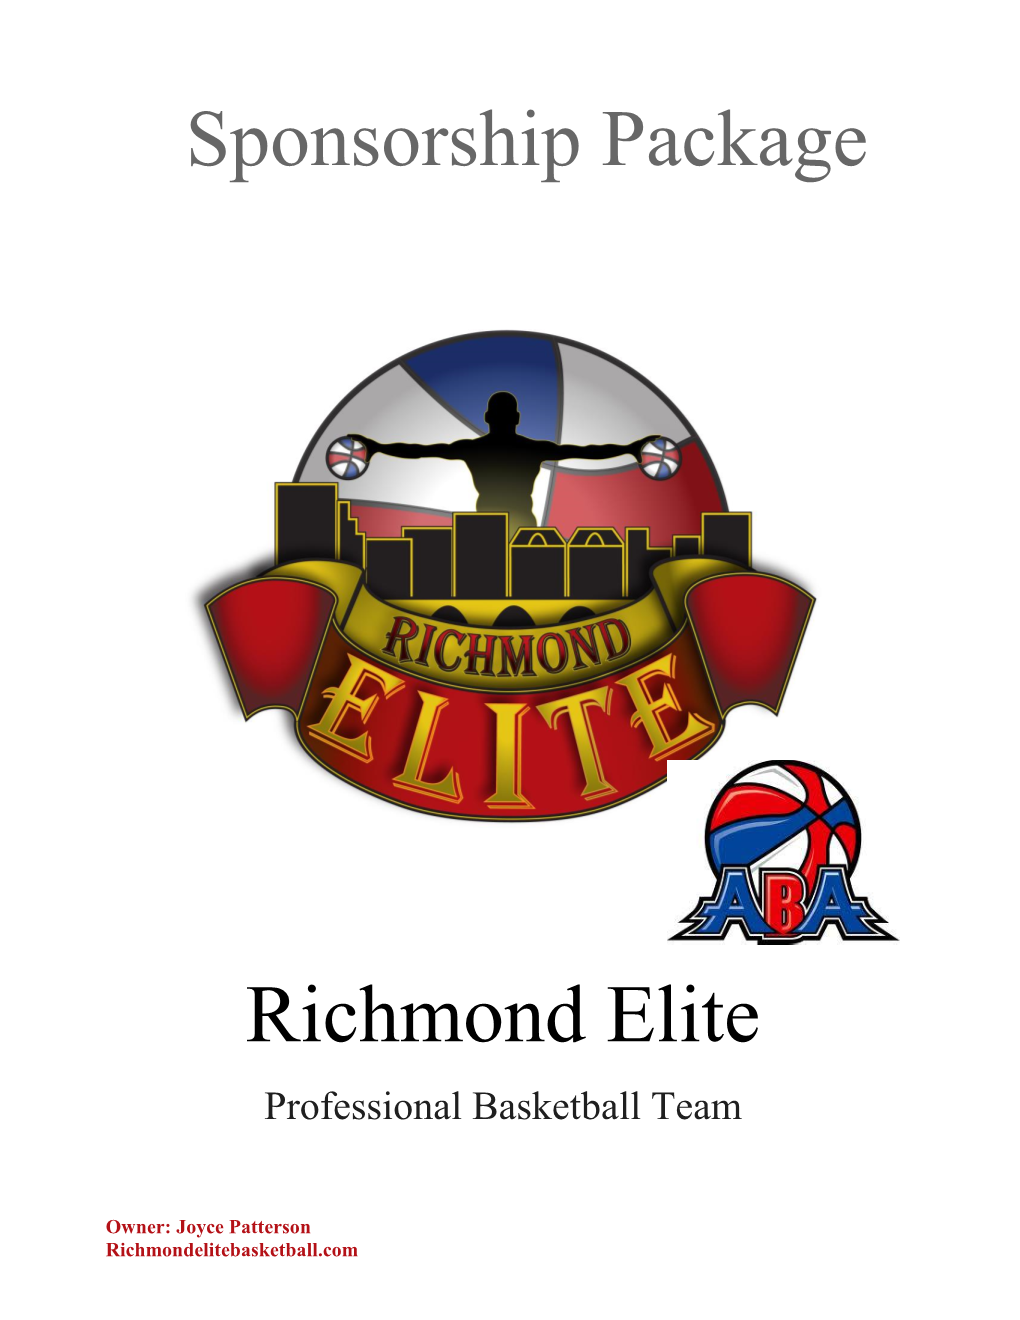 Richmond Elite Professional Basketball Team